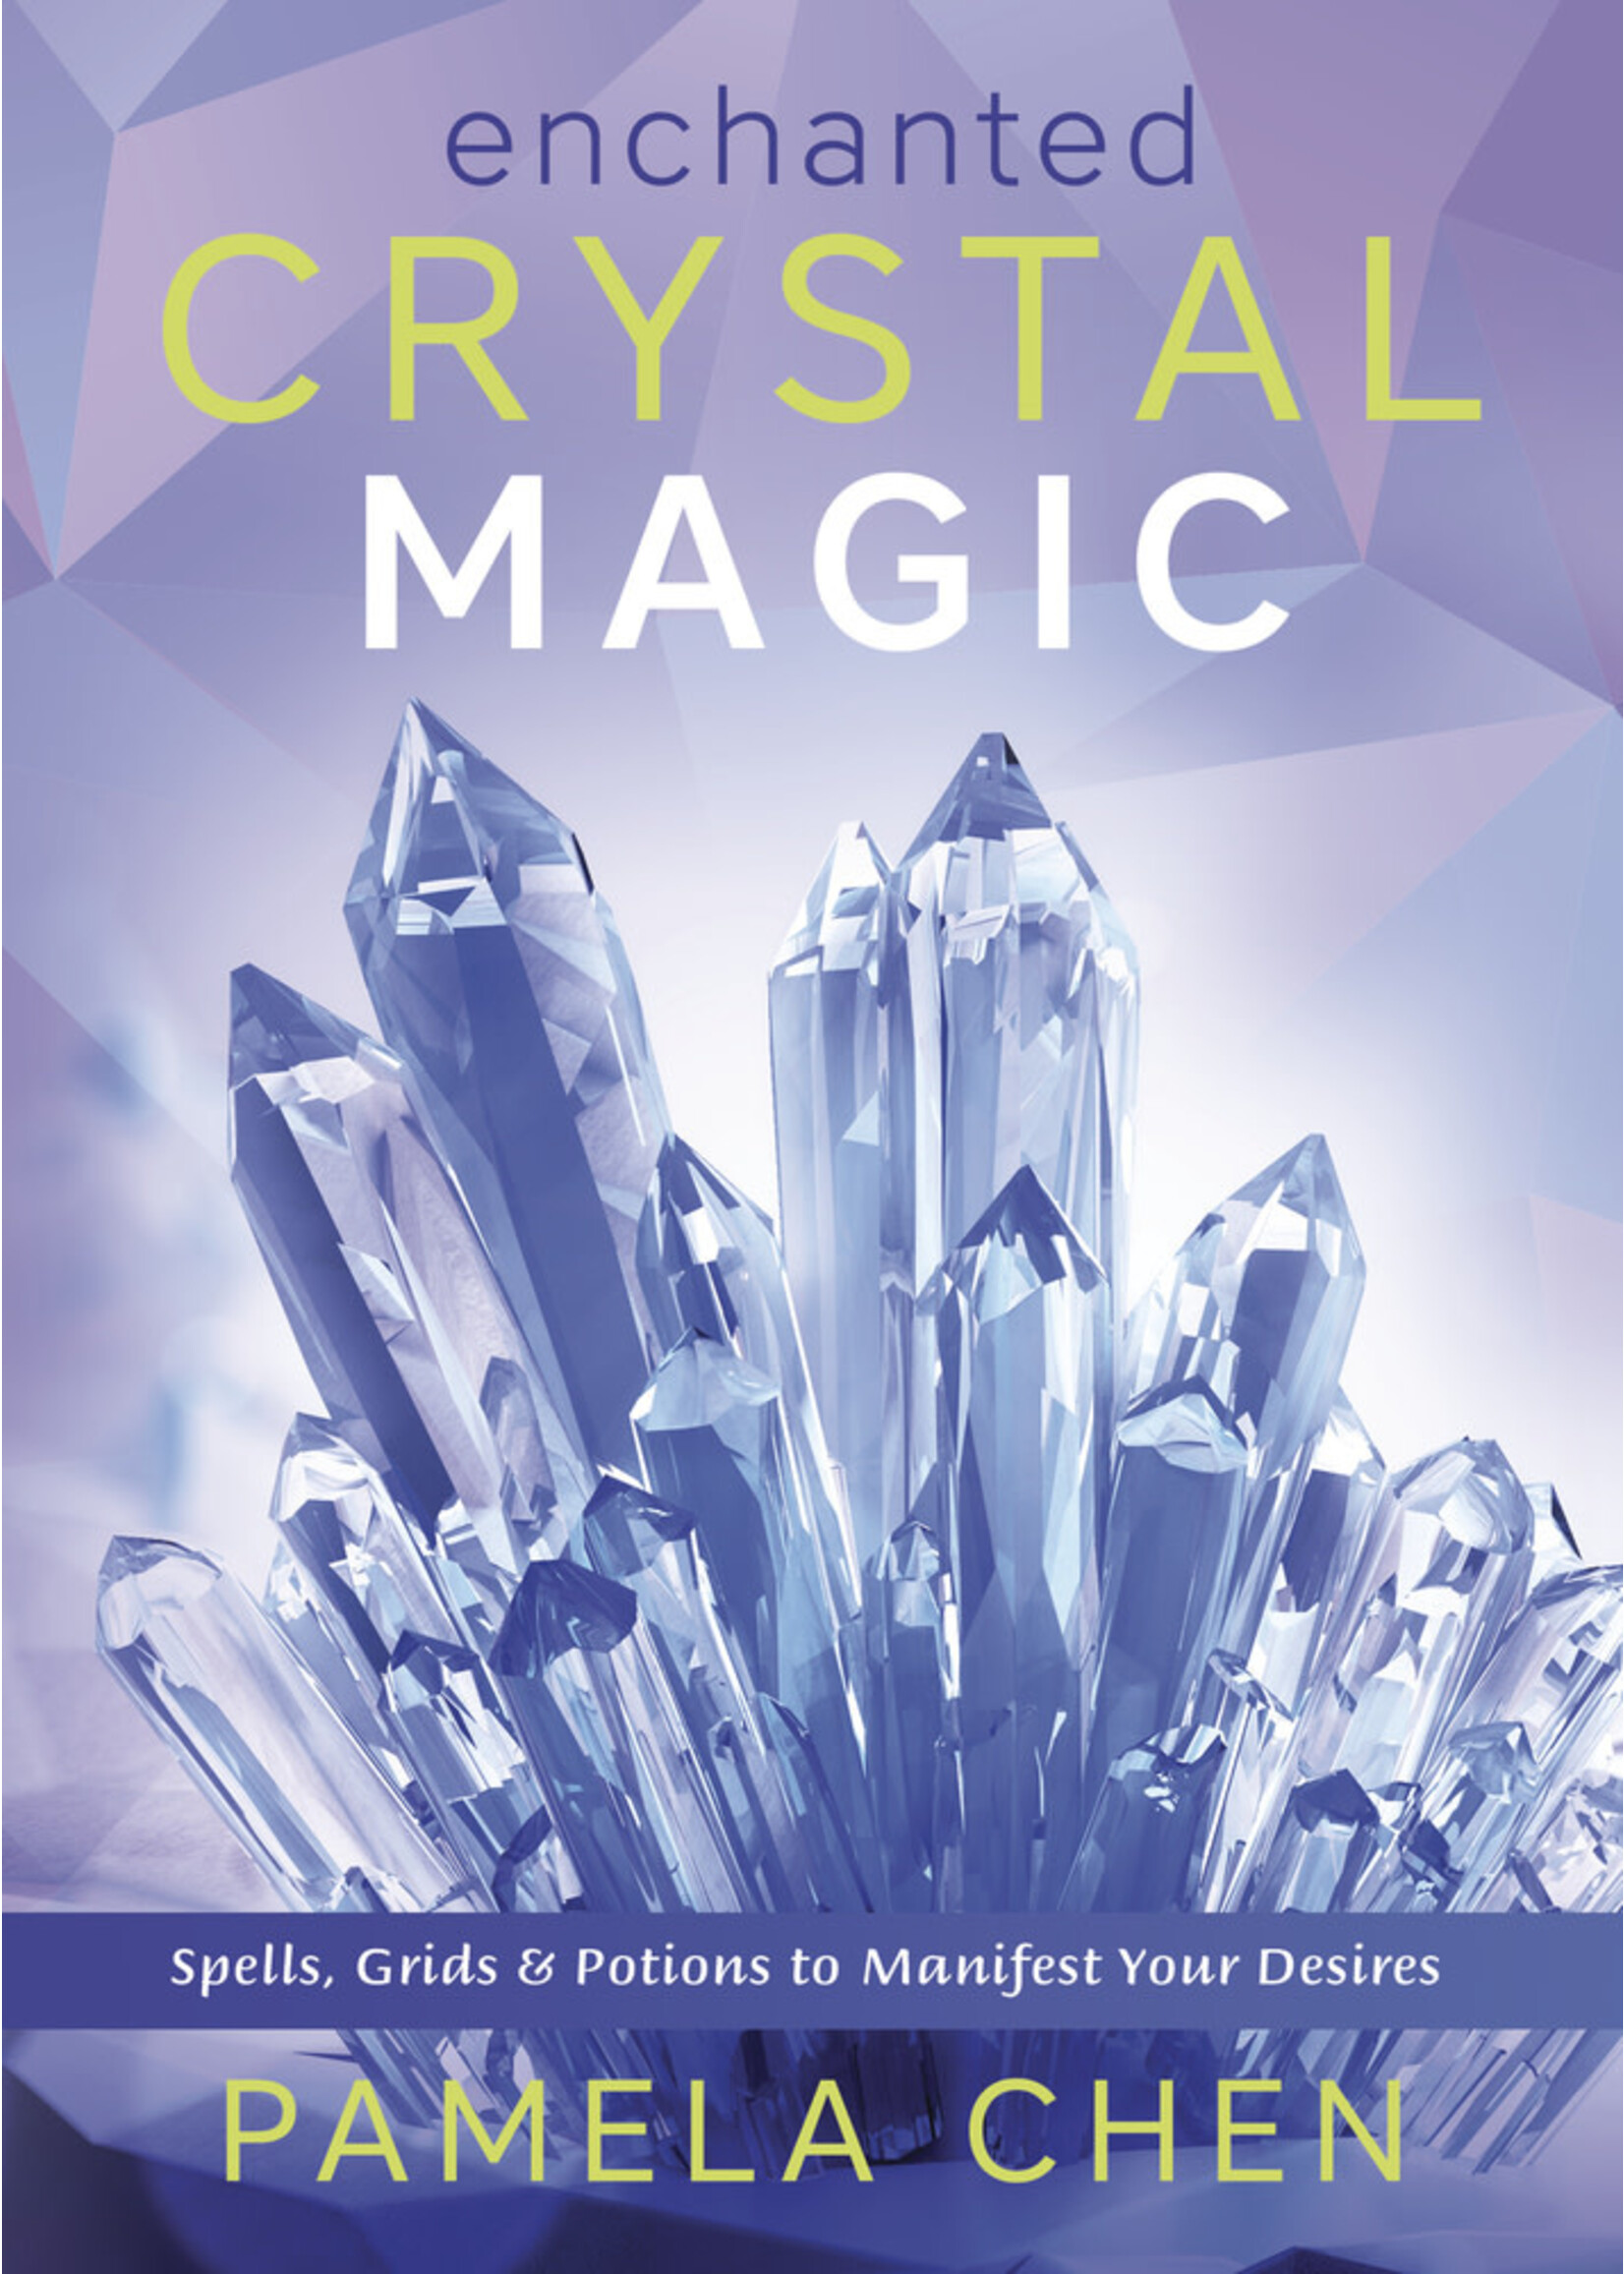 Enchanted Crystal Magic by Pamela Chen